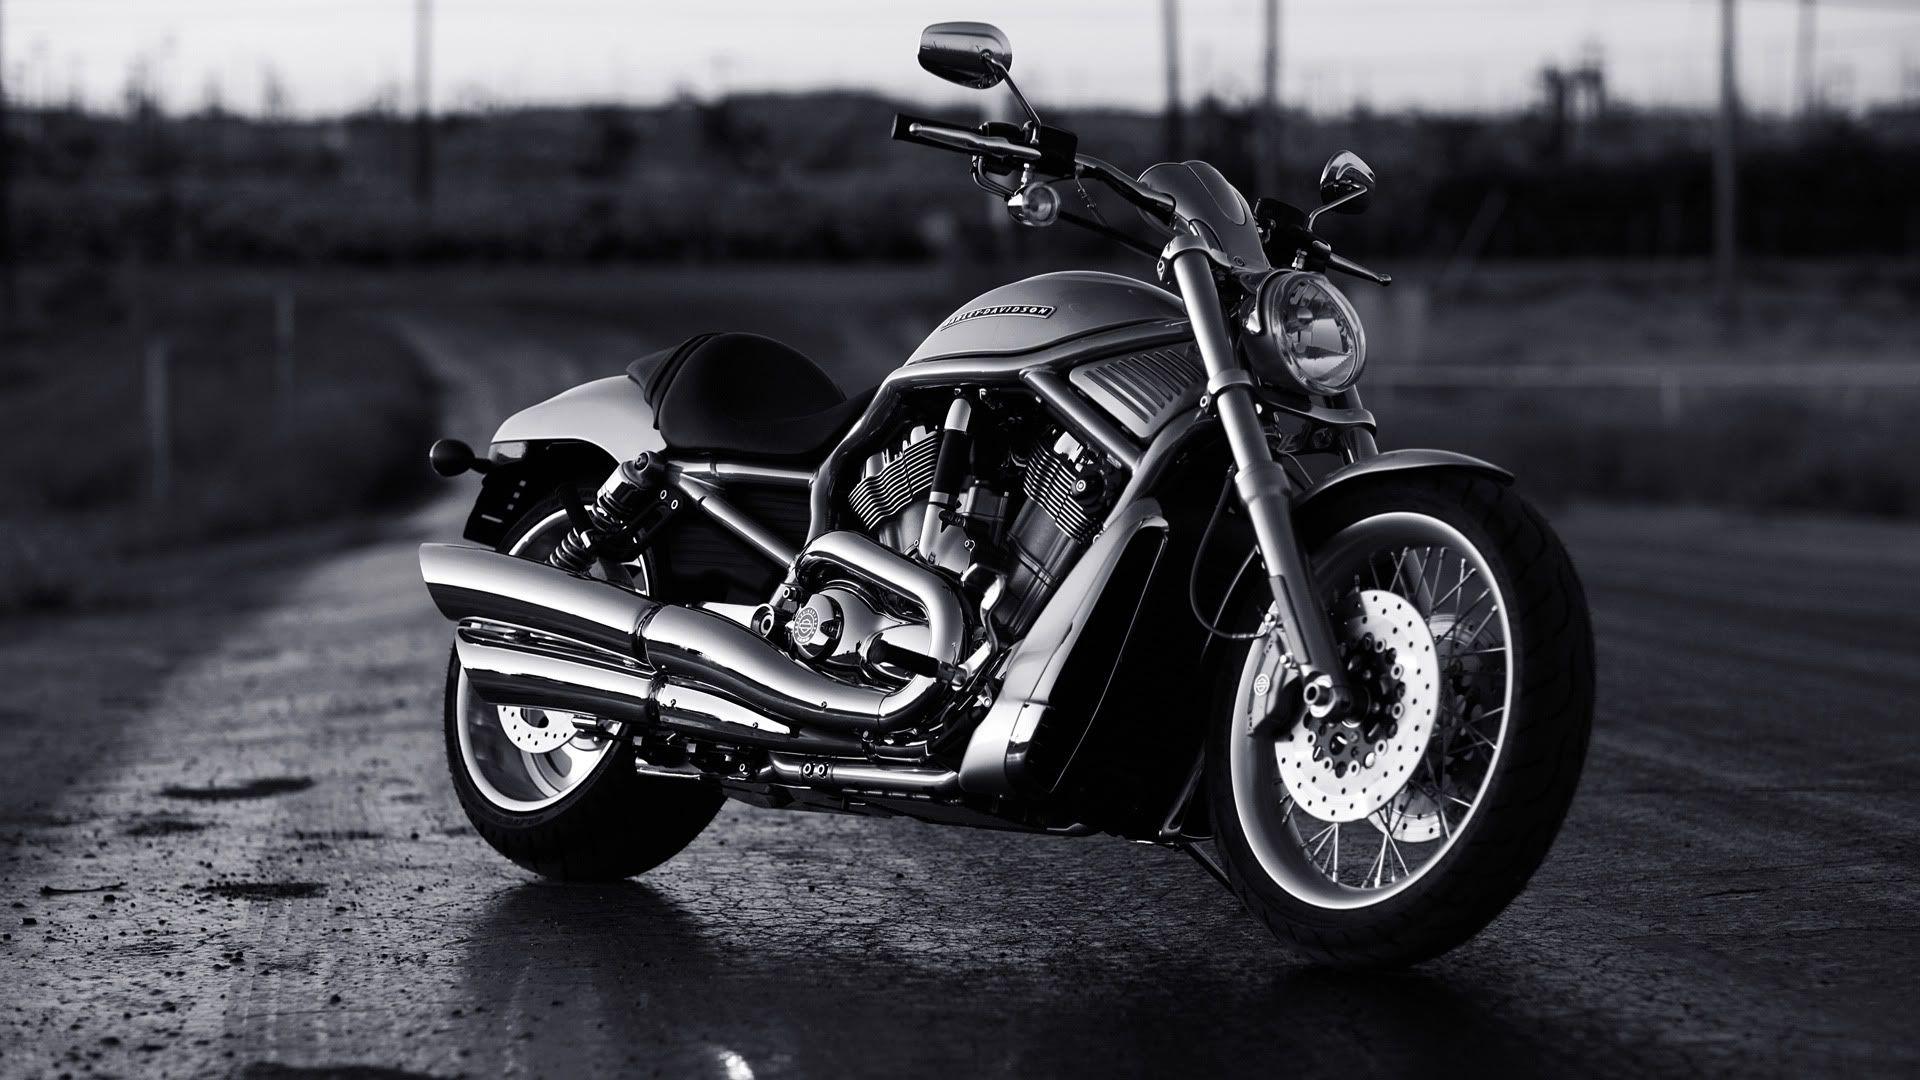 Wallpaper For > Harley Davidson V Rod Wallpaper HD